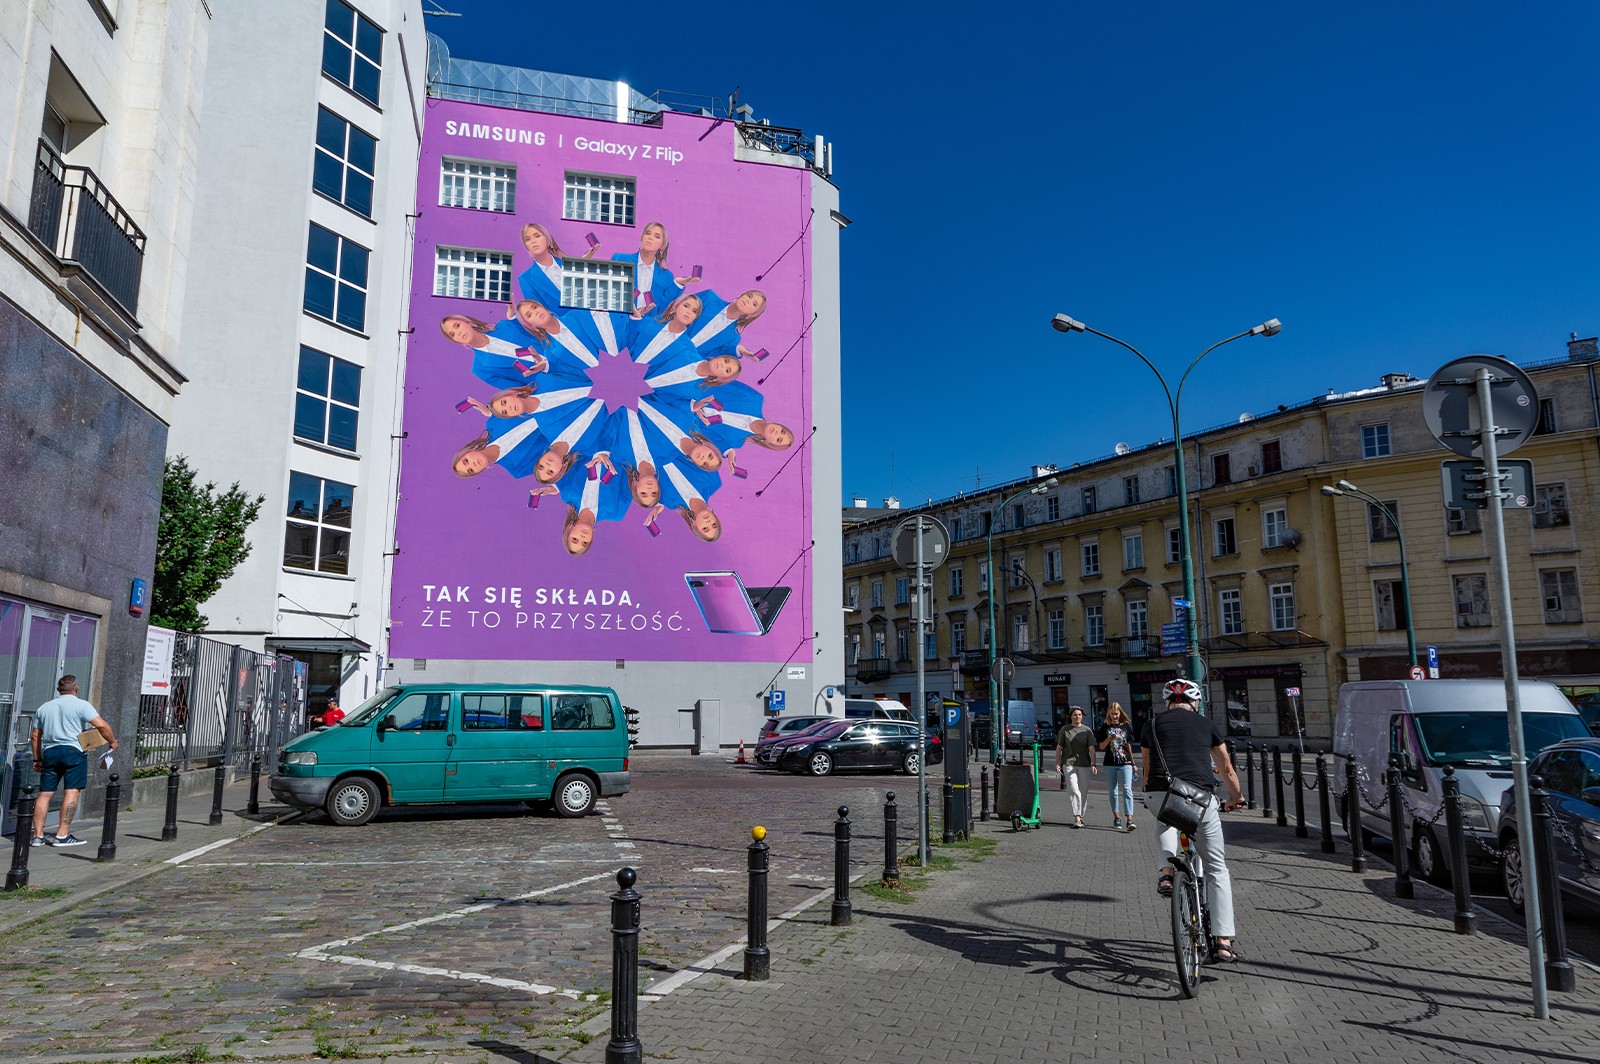  Samsung Galaxy Z Flip mural on Bracka street in Warsaw | Samsung Galaxy Z Flip | Portfolio